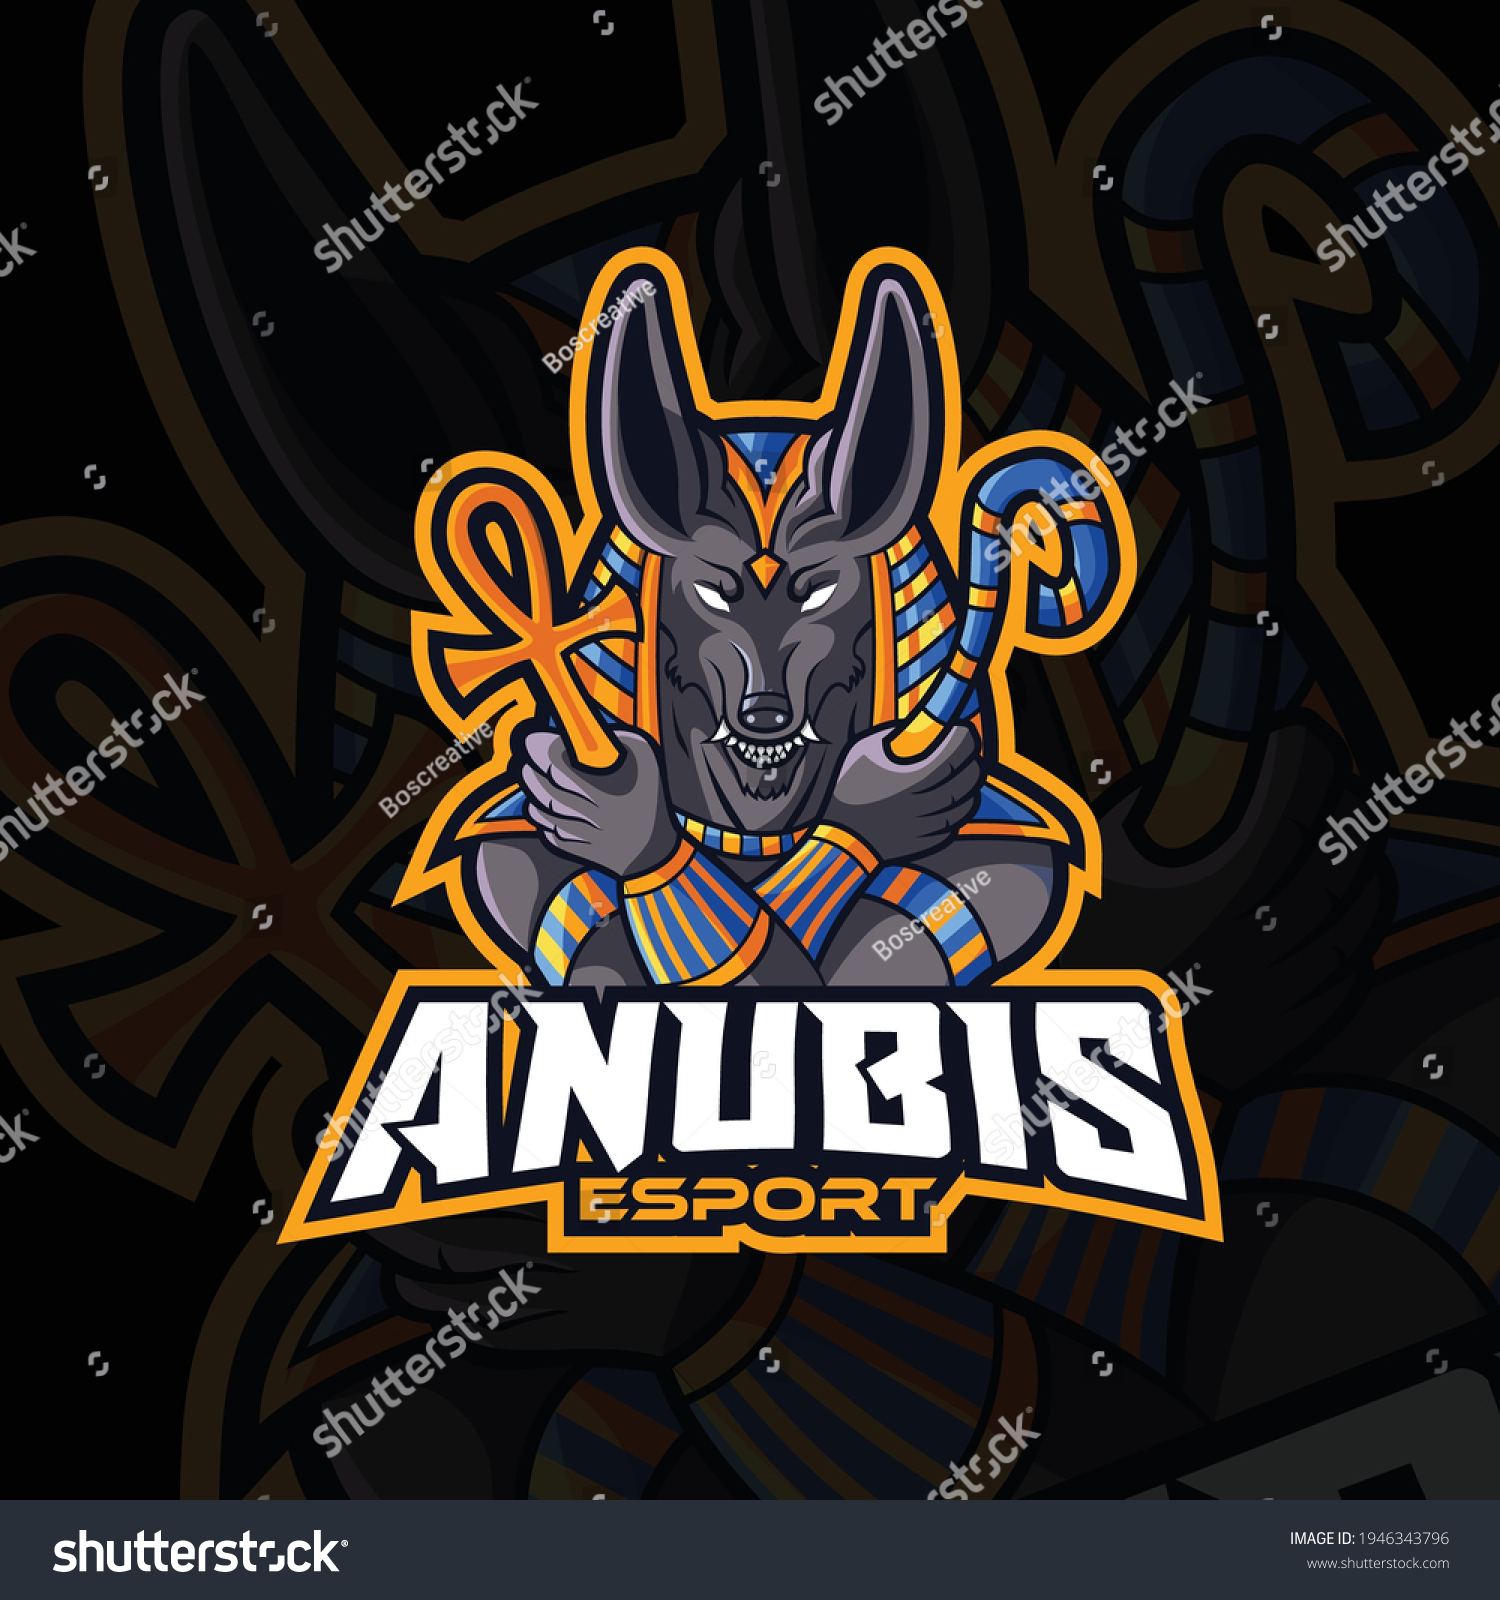 Rusty Abbreviate Cooperative Anubis E Sport Gaming Logo Design Stock Vector (Royalty Free) 1946343796 |  Shutterstock